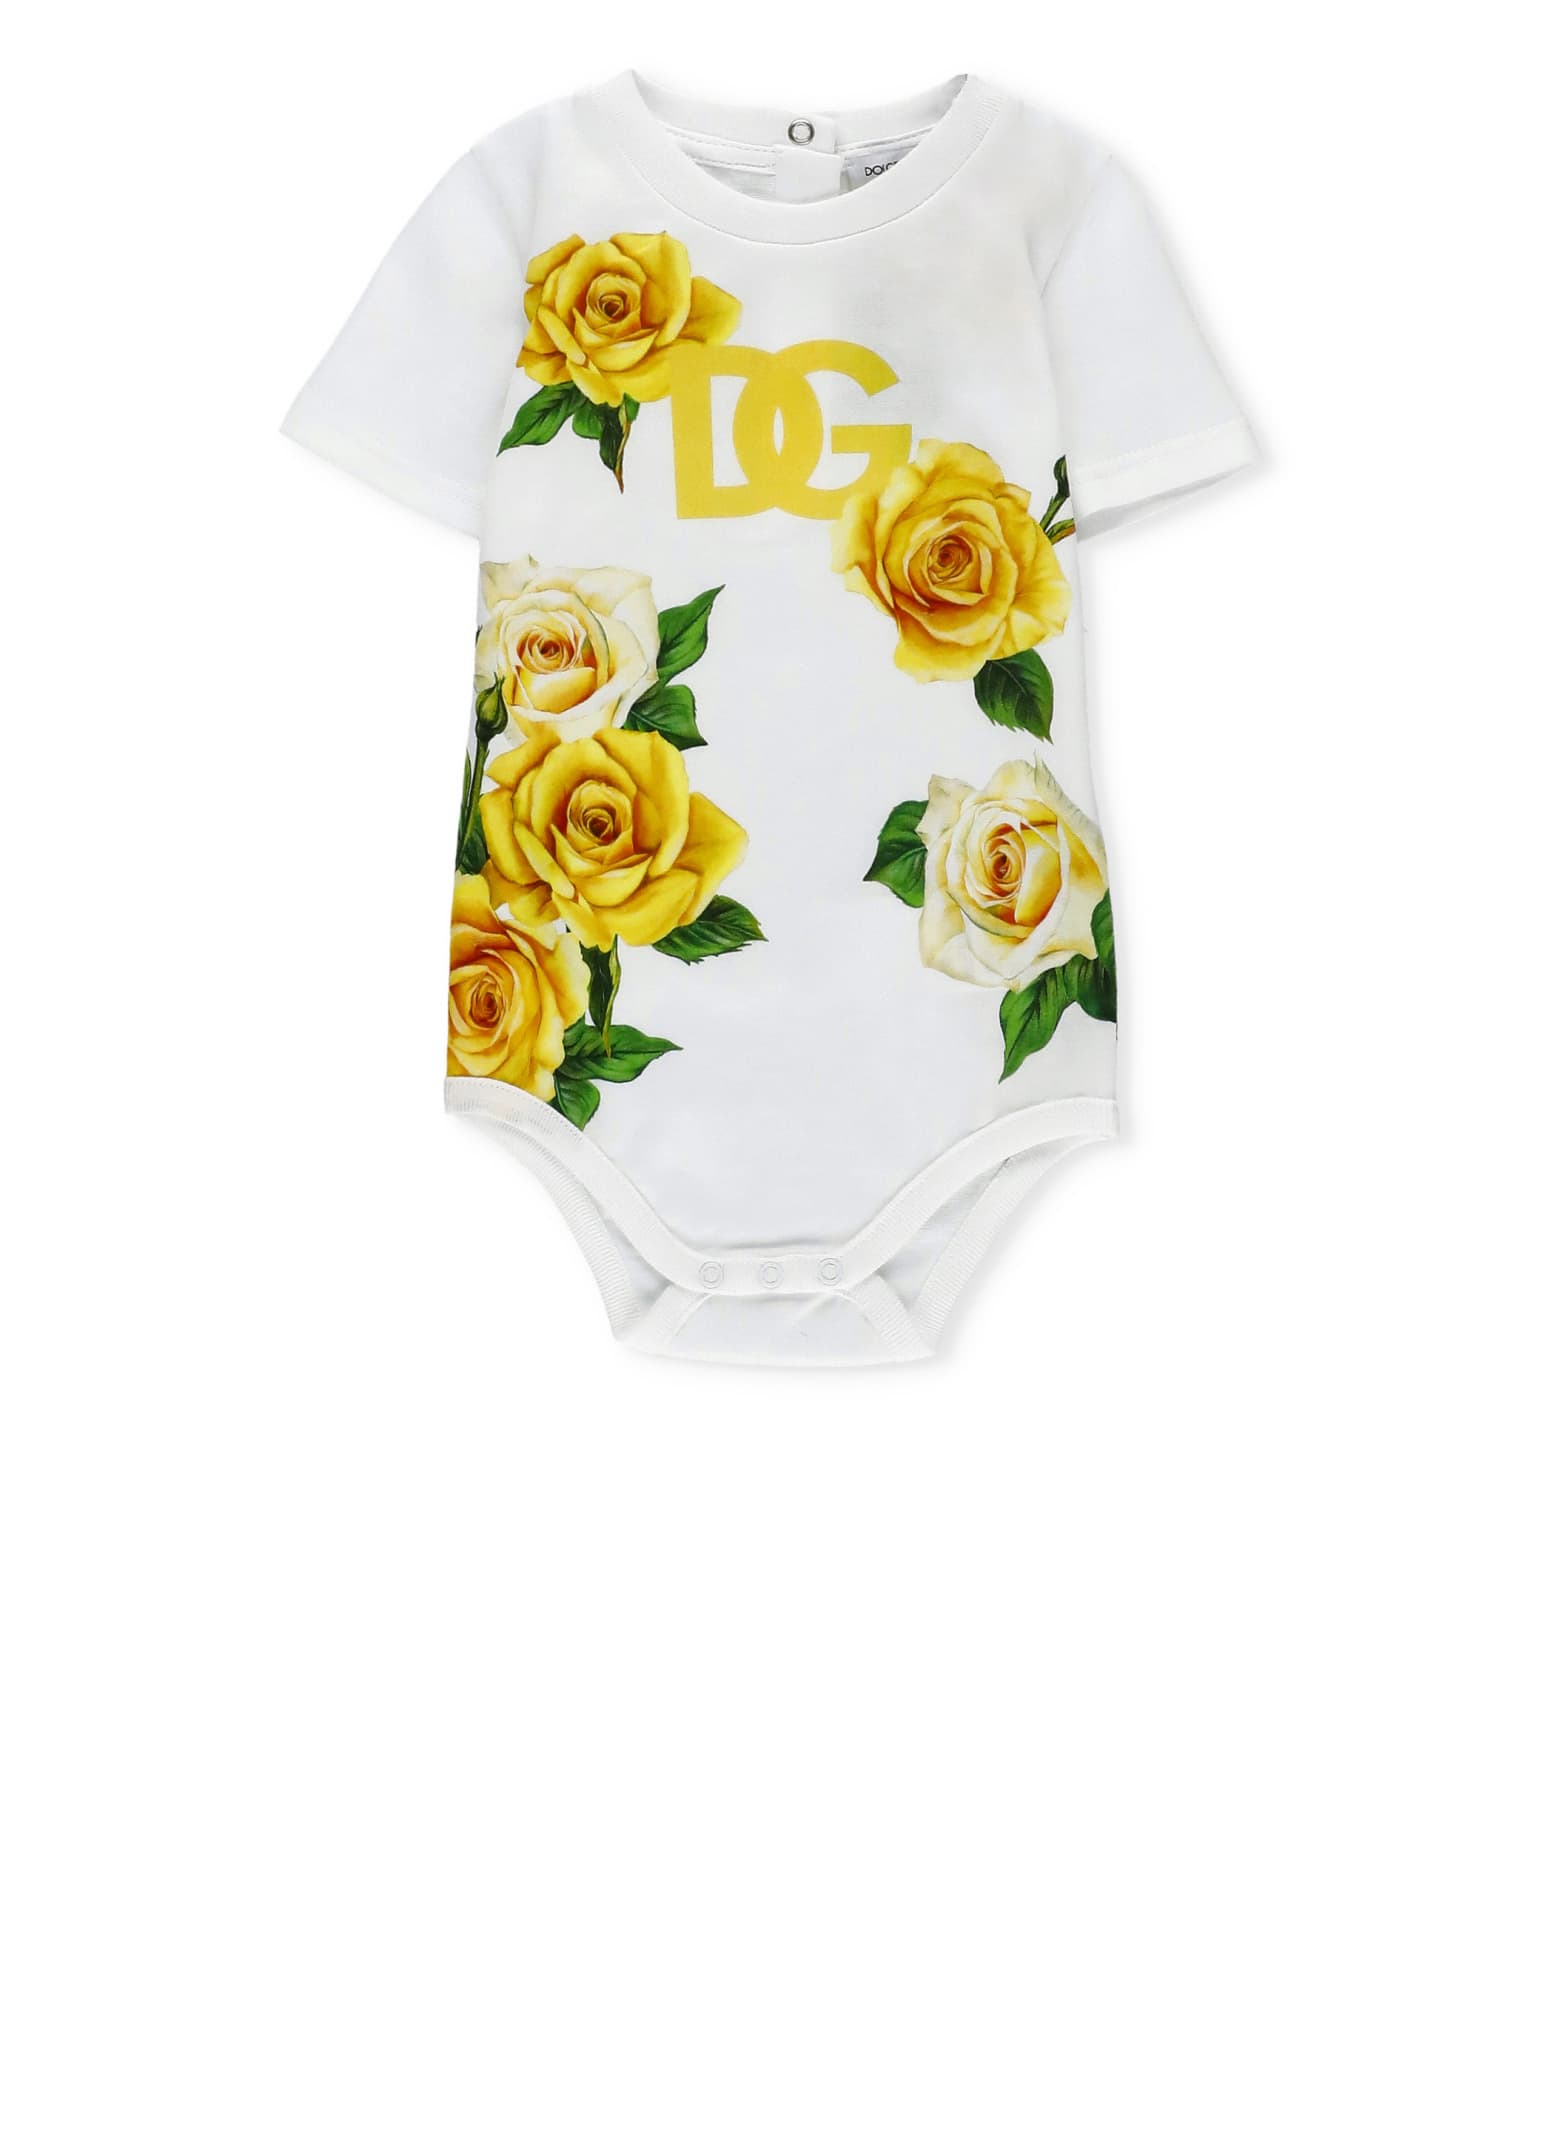 Dolce & Gabbana Babies' Cotton Body In White